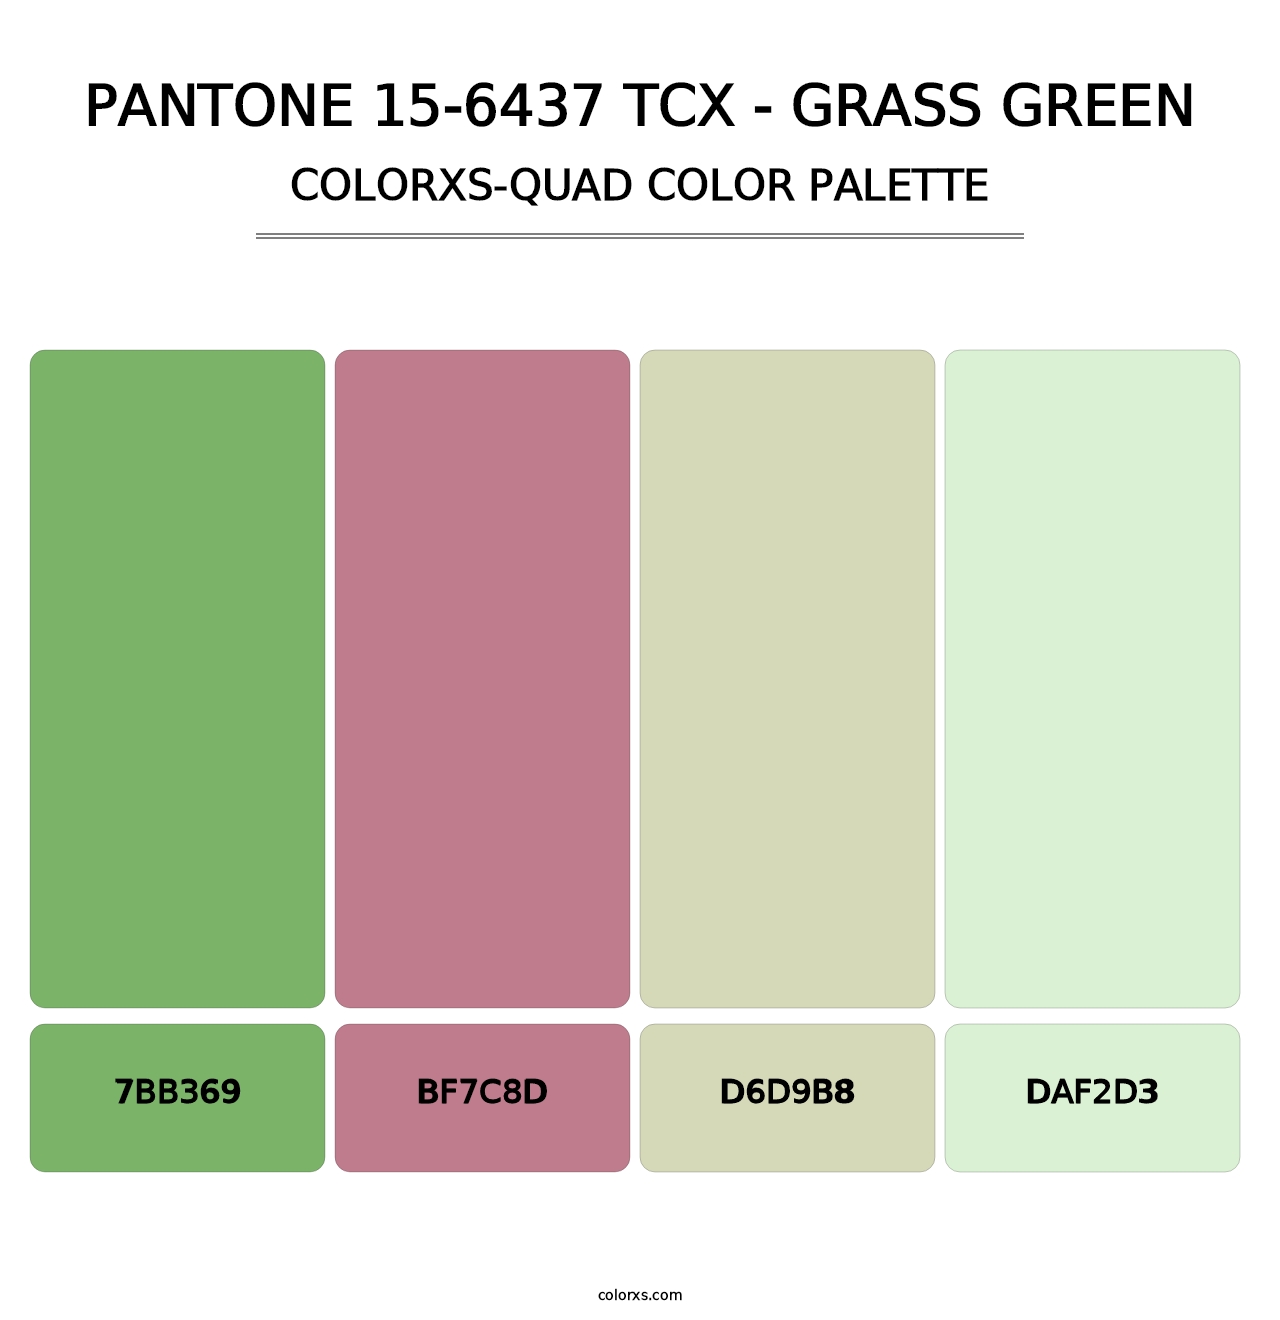 PANTONE 15-6437 TCX - Grass Green - Colorxs Quad Palette